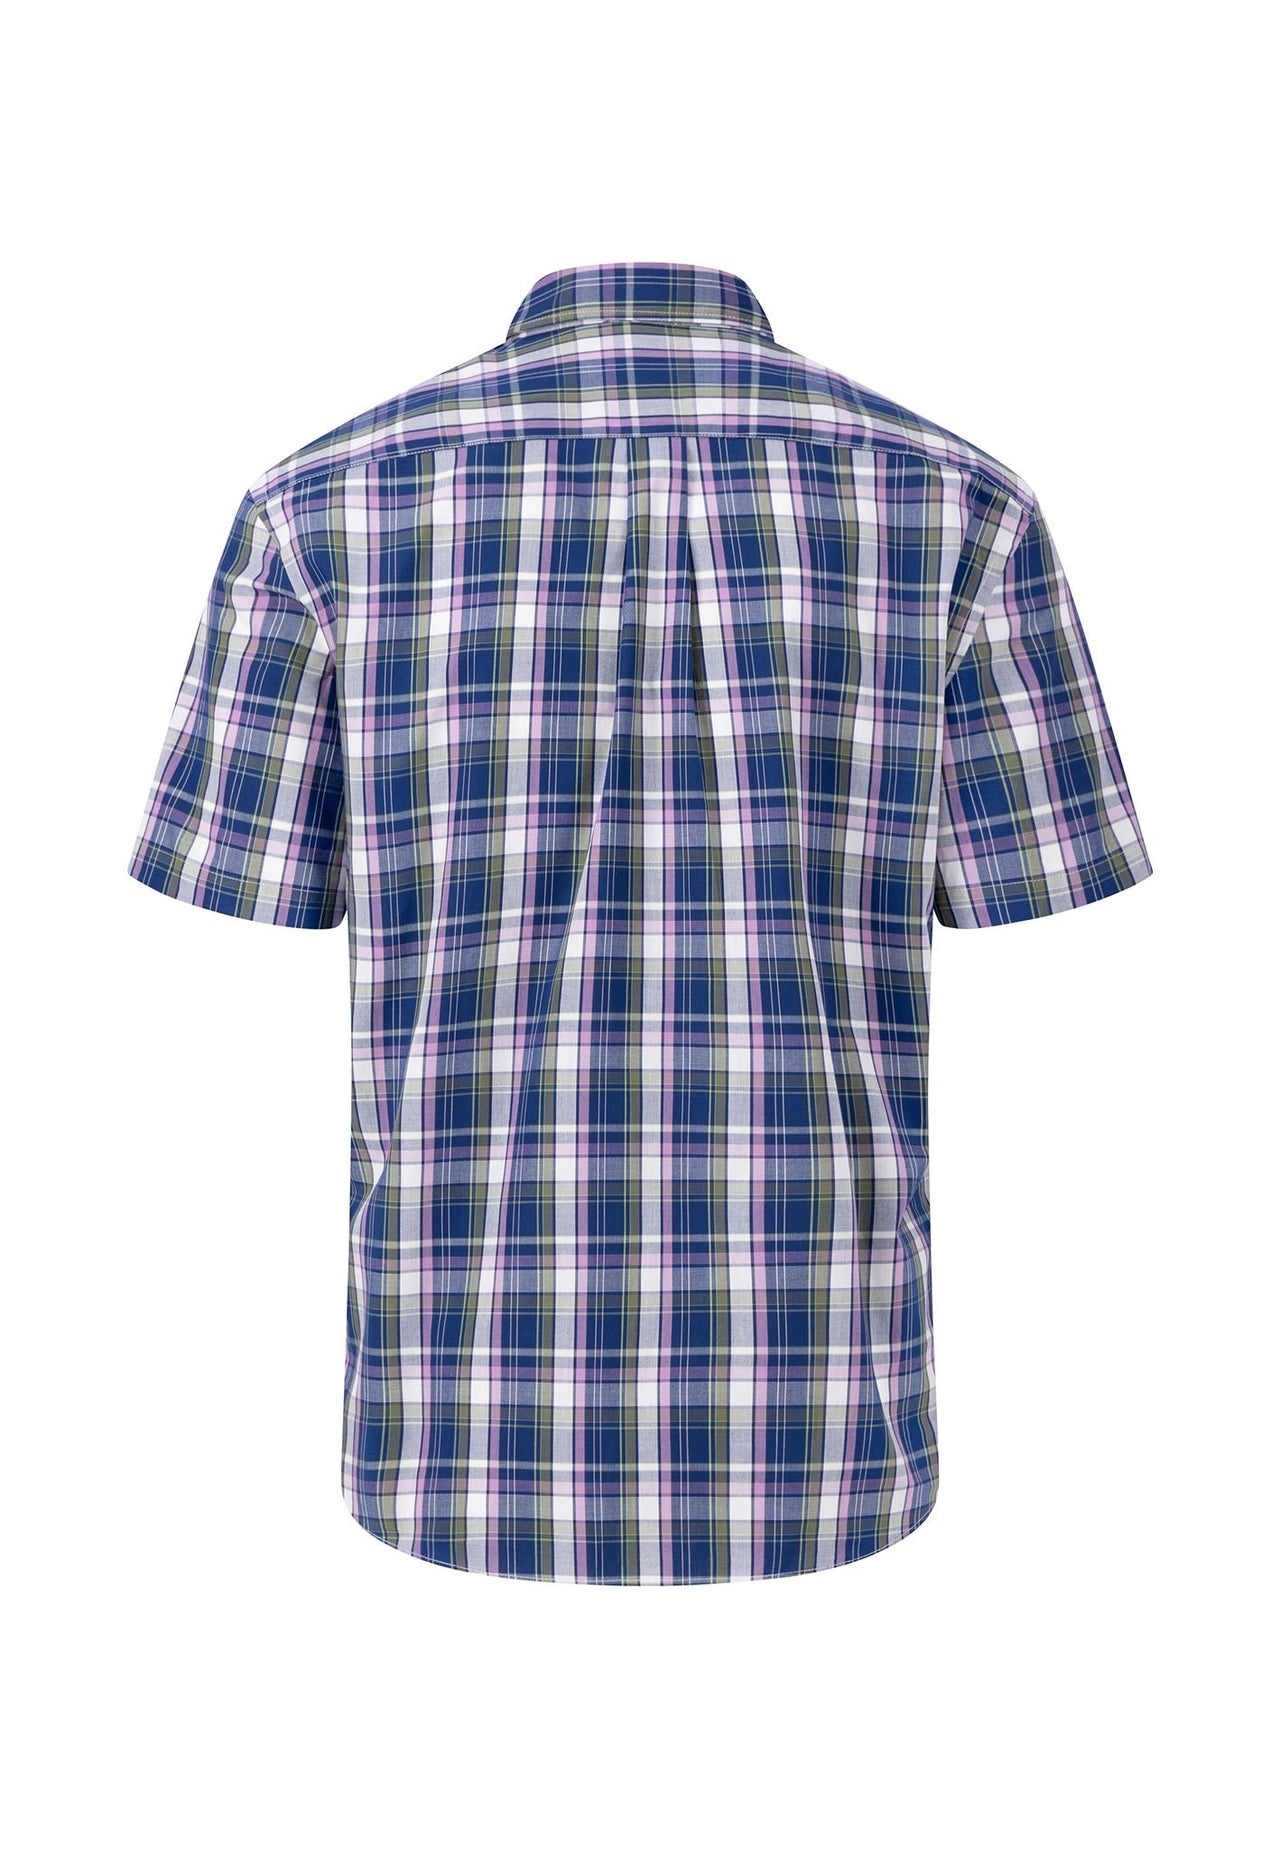 Fynch-Hatton Summer Greens Shirt - Navy